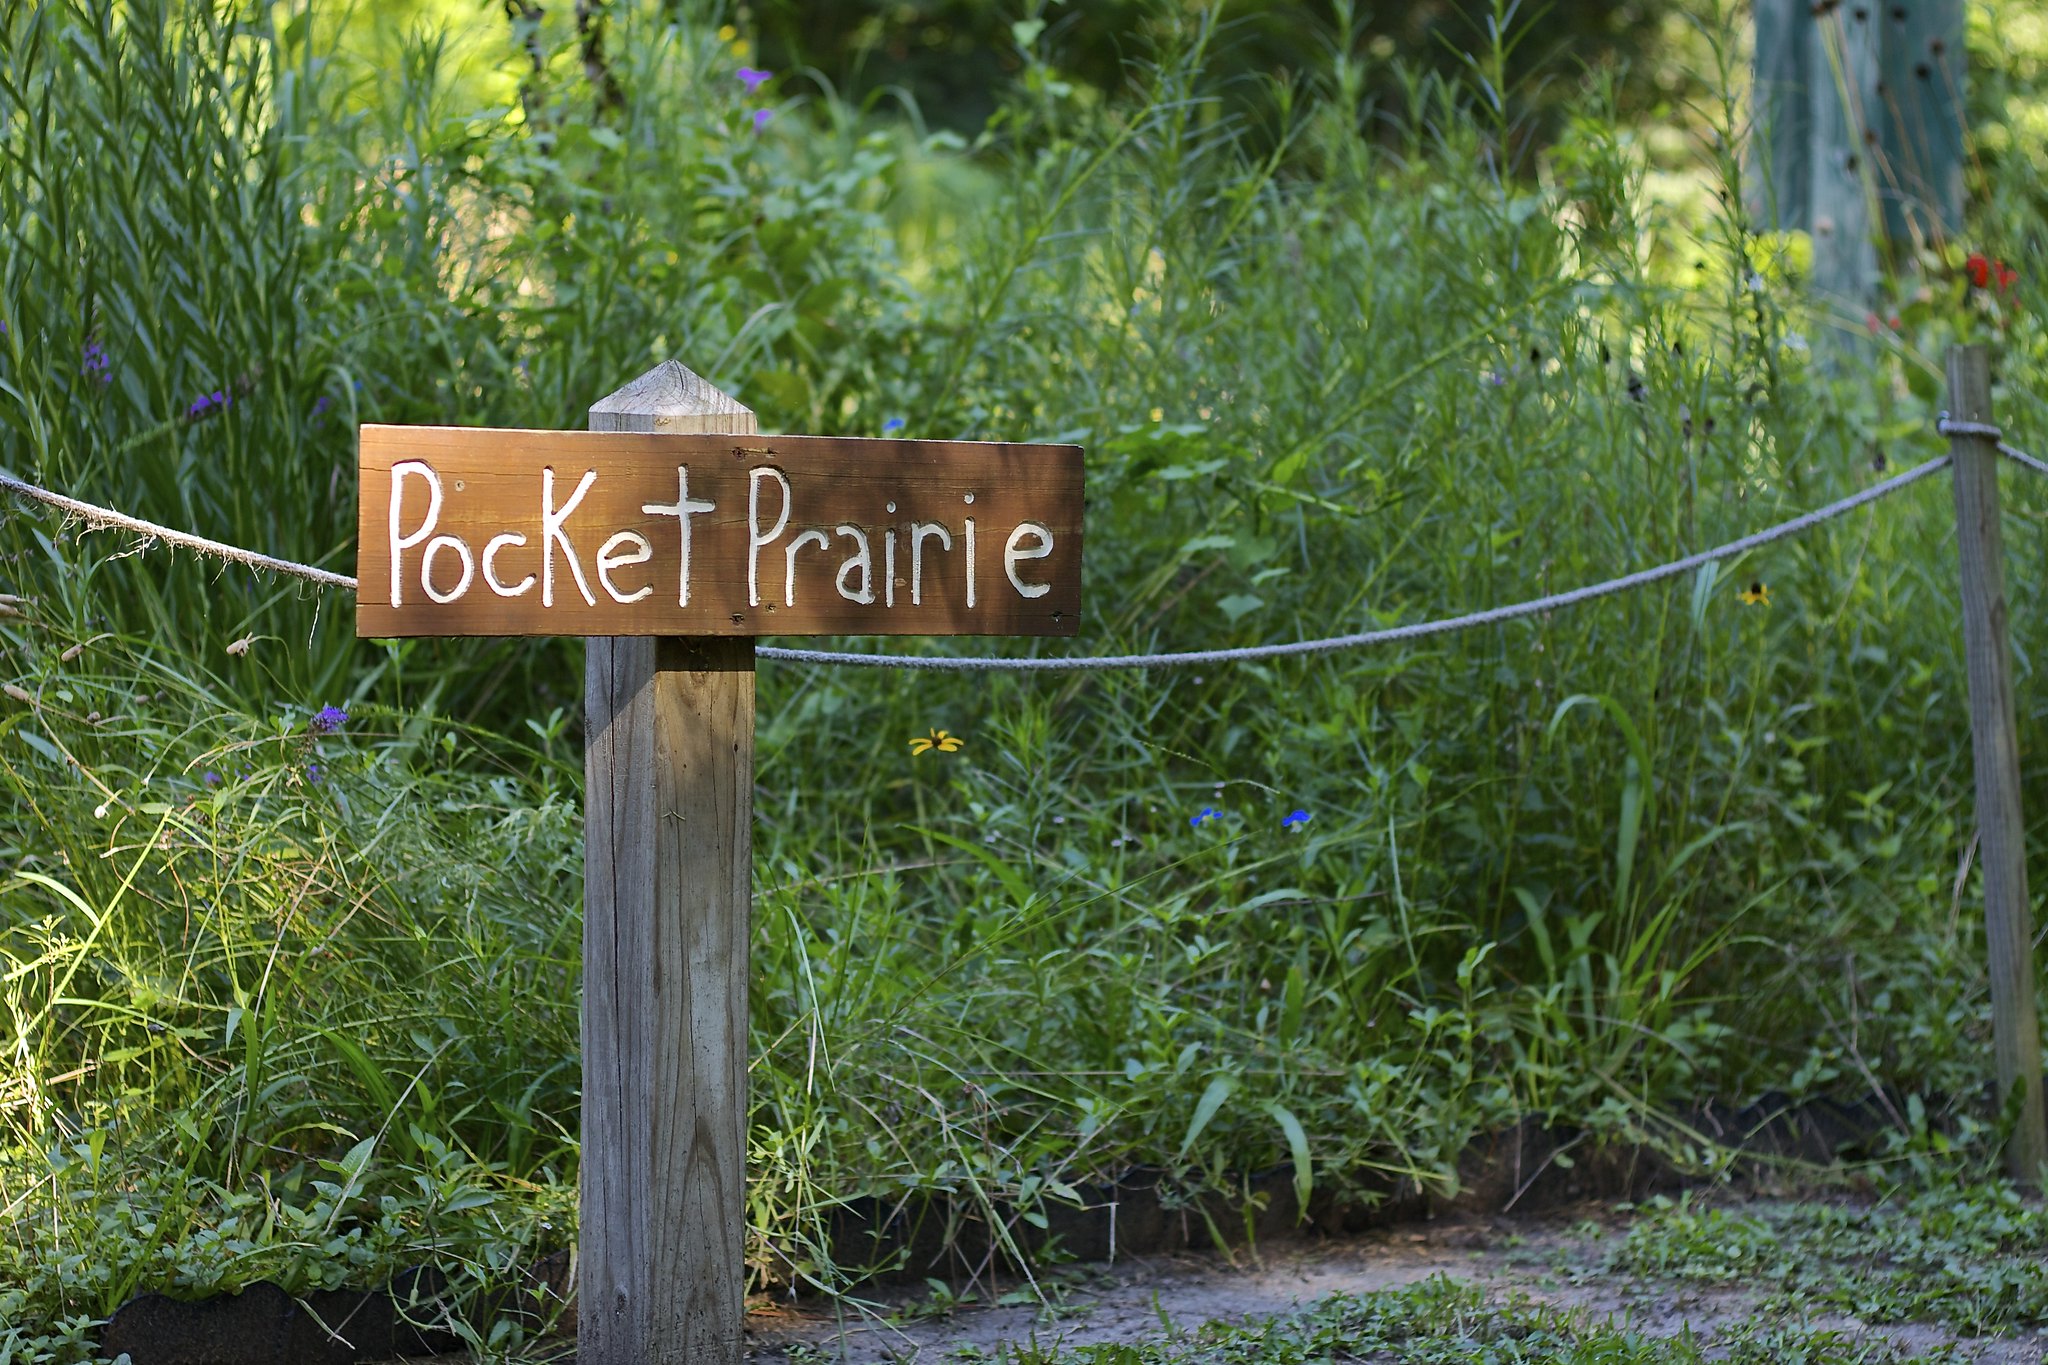 A pocket prairie in Russ Pitman Park in Bellaire.